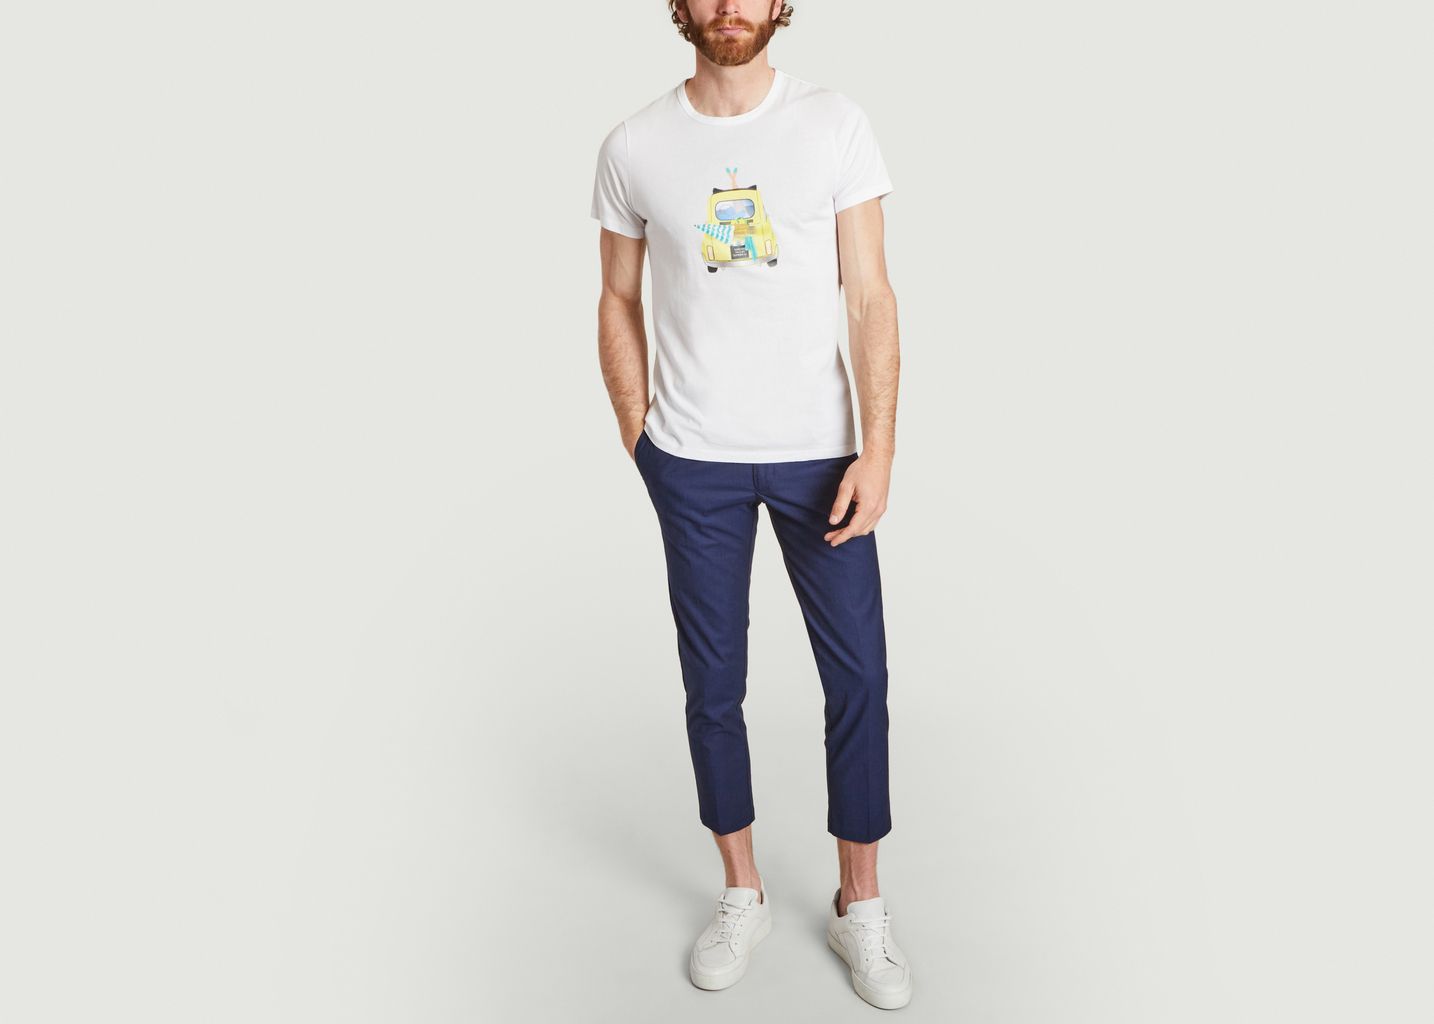 T-shirt Yann Cinquencento  - Les Garçons Faciles